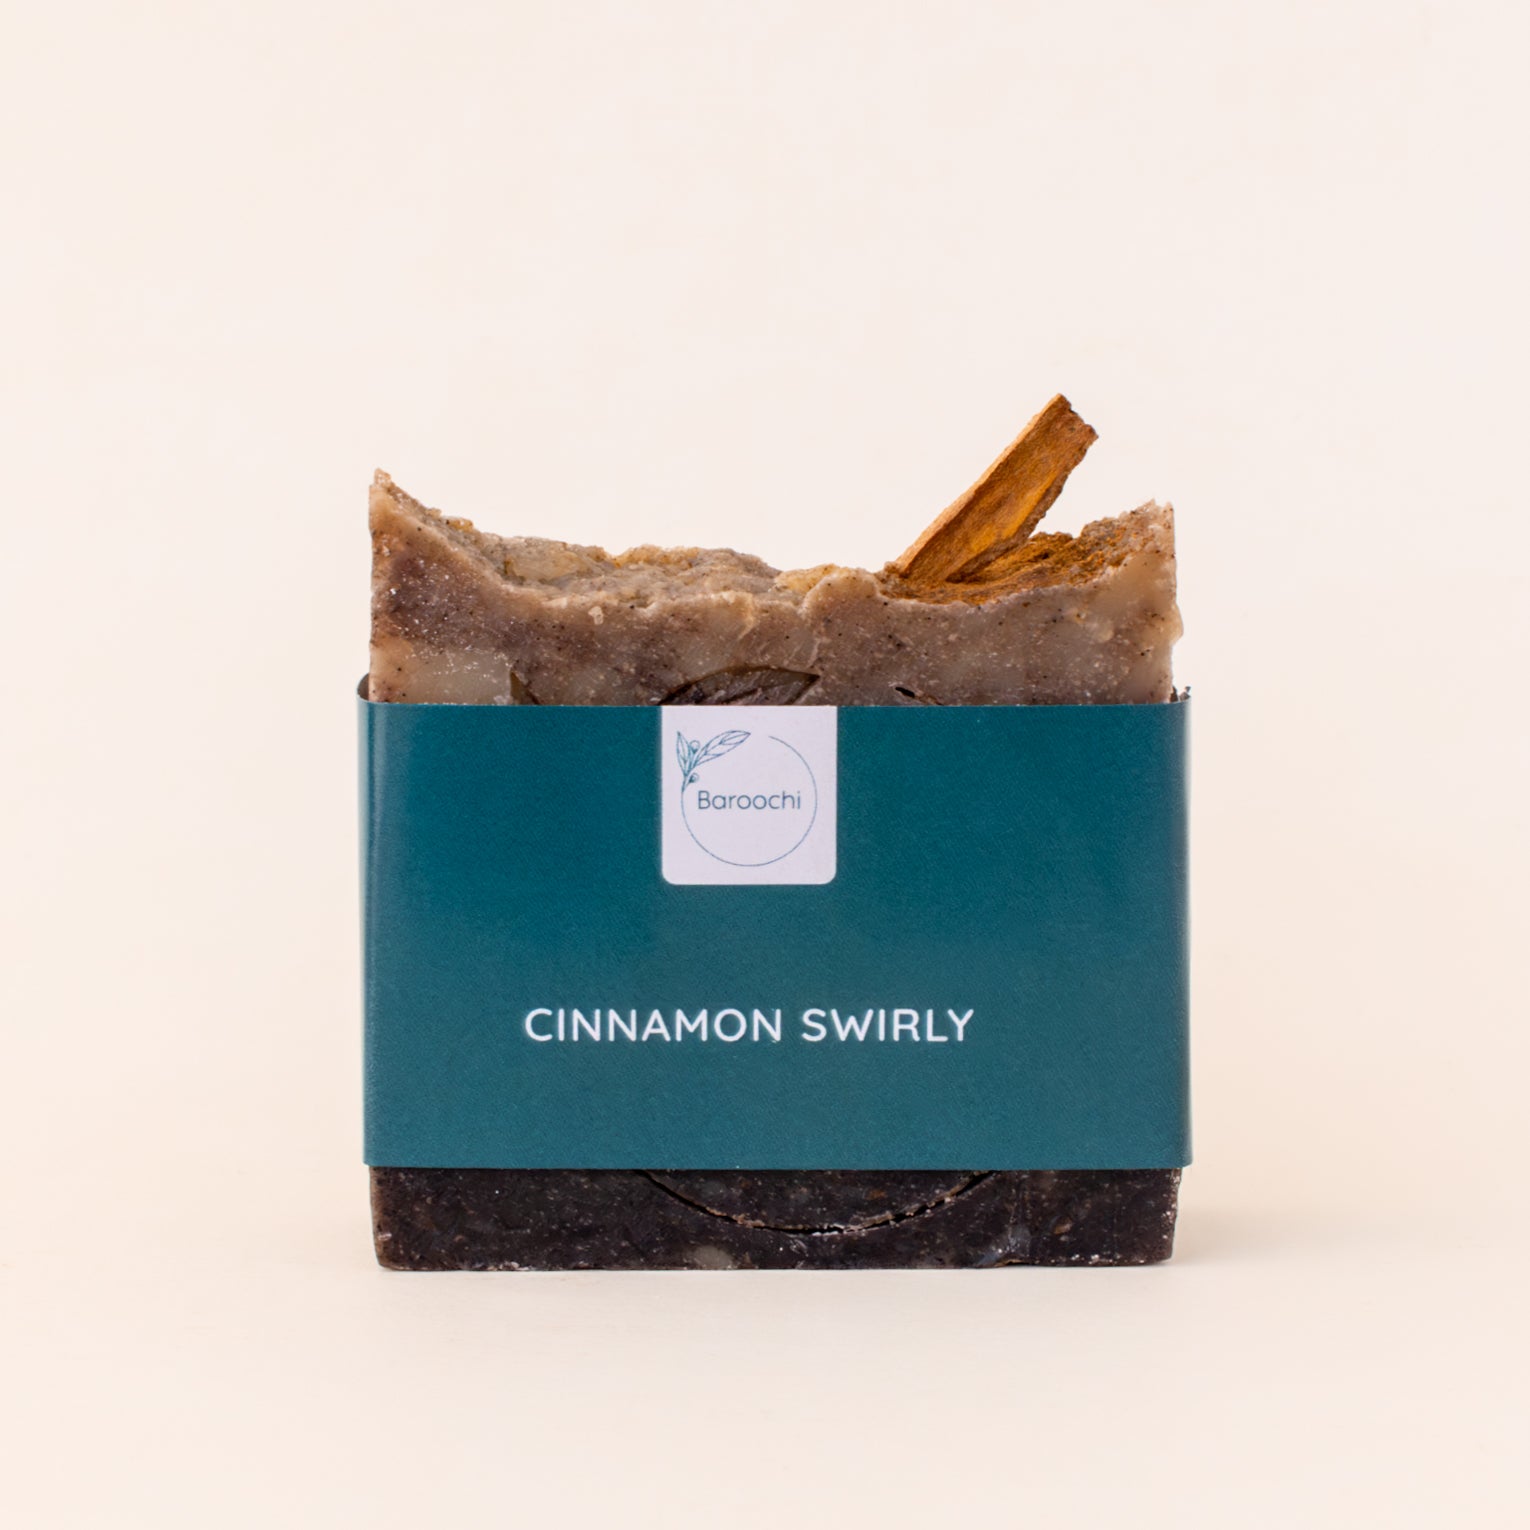 Cinnamon Swirly Natural Soap Bar